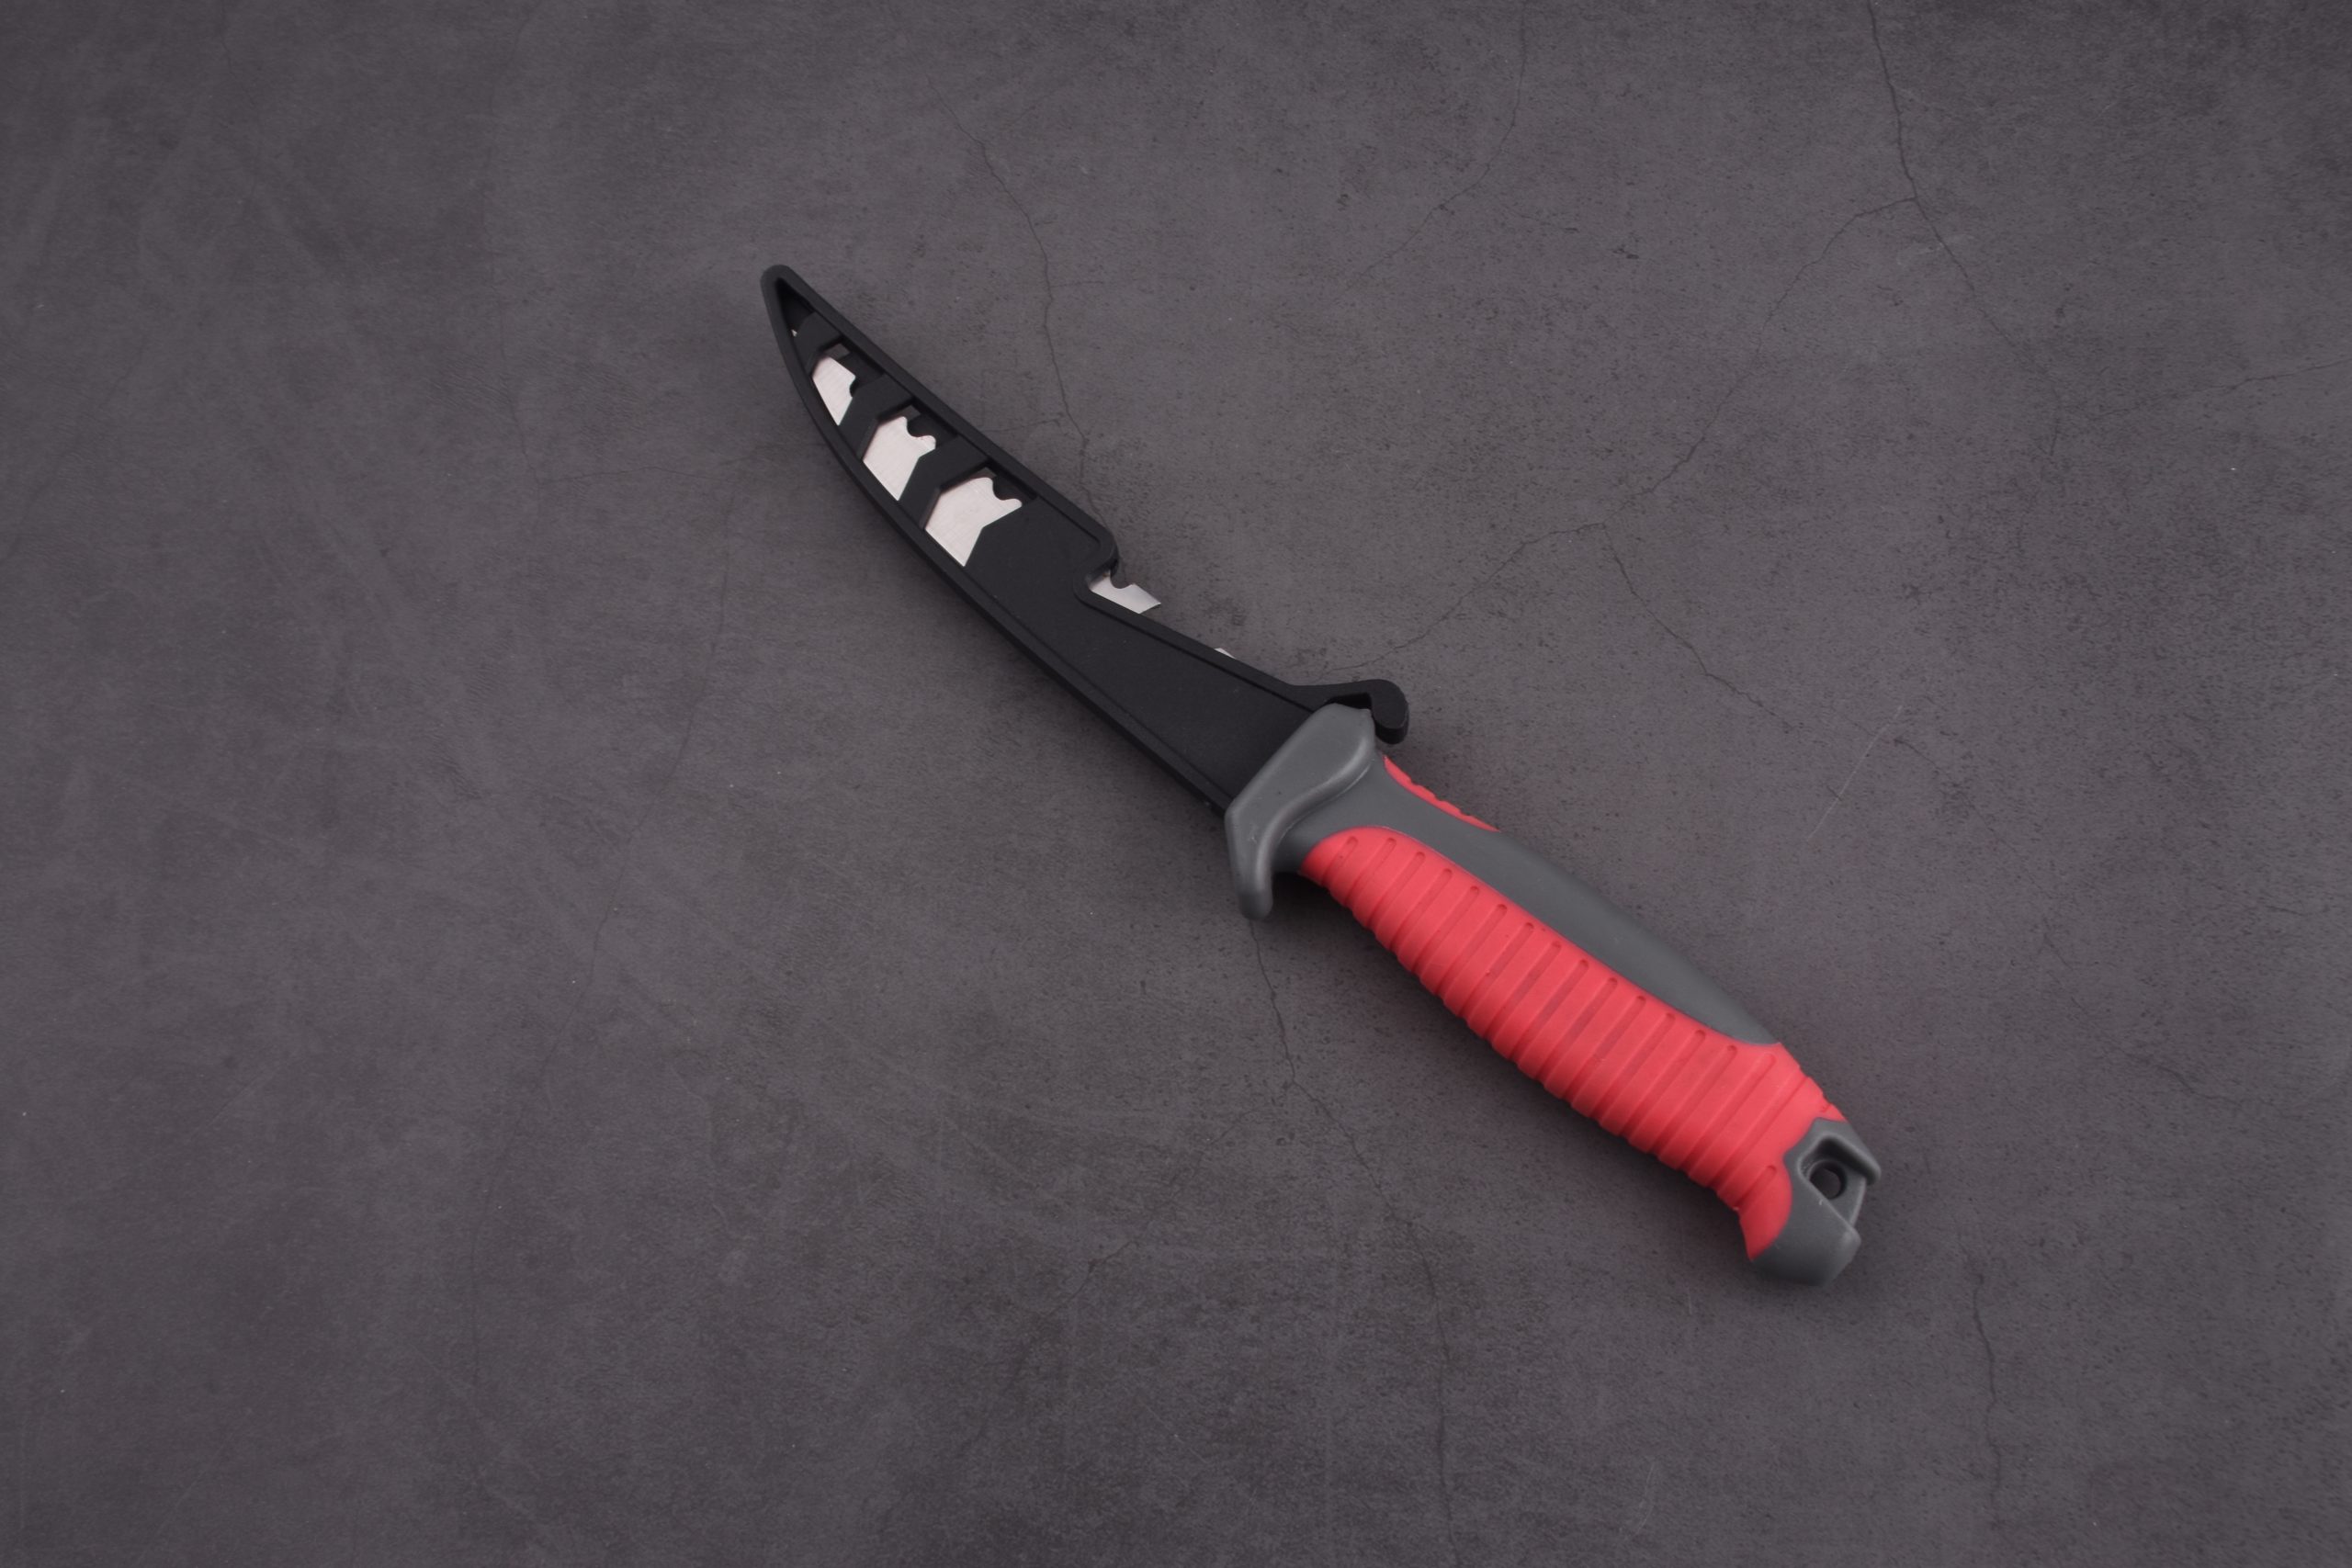 OEM Fixed Fishing Knife 3Cr13 Blade PP + TPR Handle dengan PP sheath hitam & merah FX-22654-05